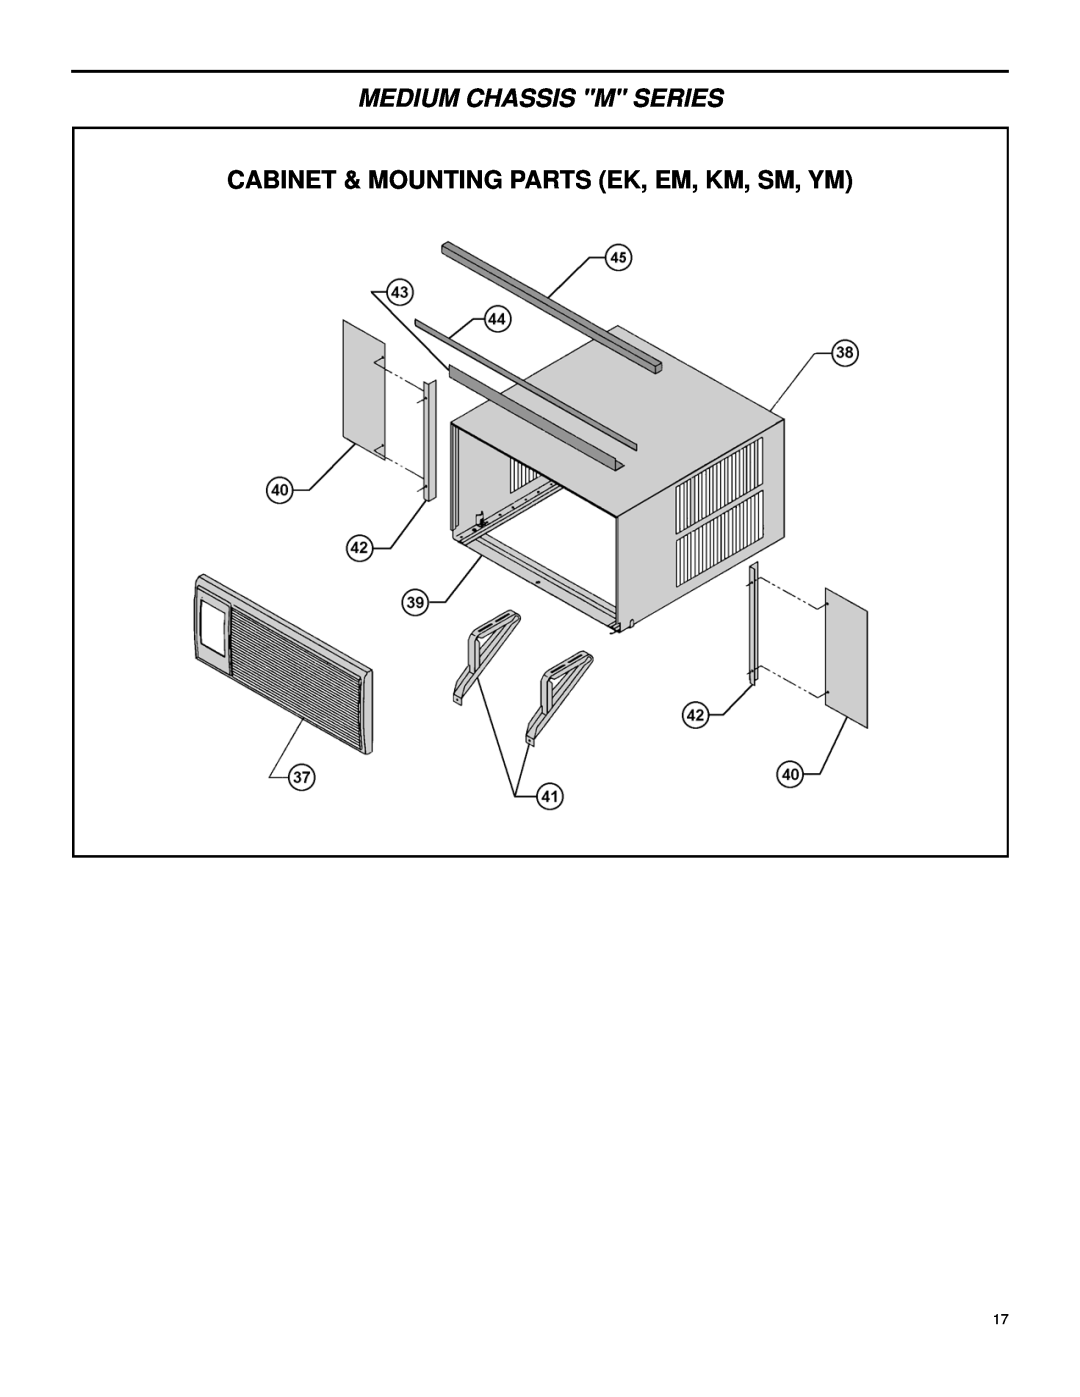 Friedrich Room Air Conditioners manual Cabinet & Mounting Parts Ek, Em, Km, Sm, Ym, Medium Chassis M Series 